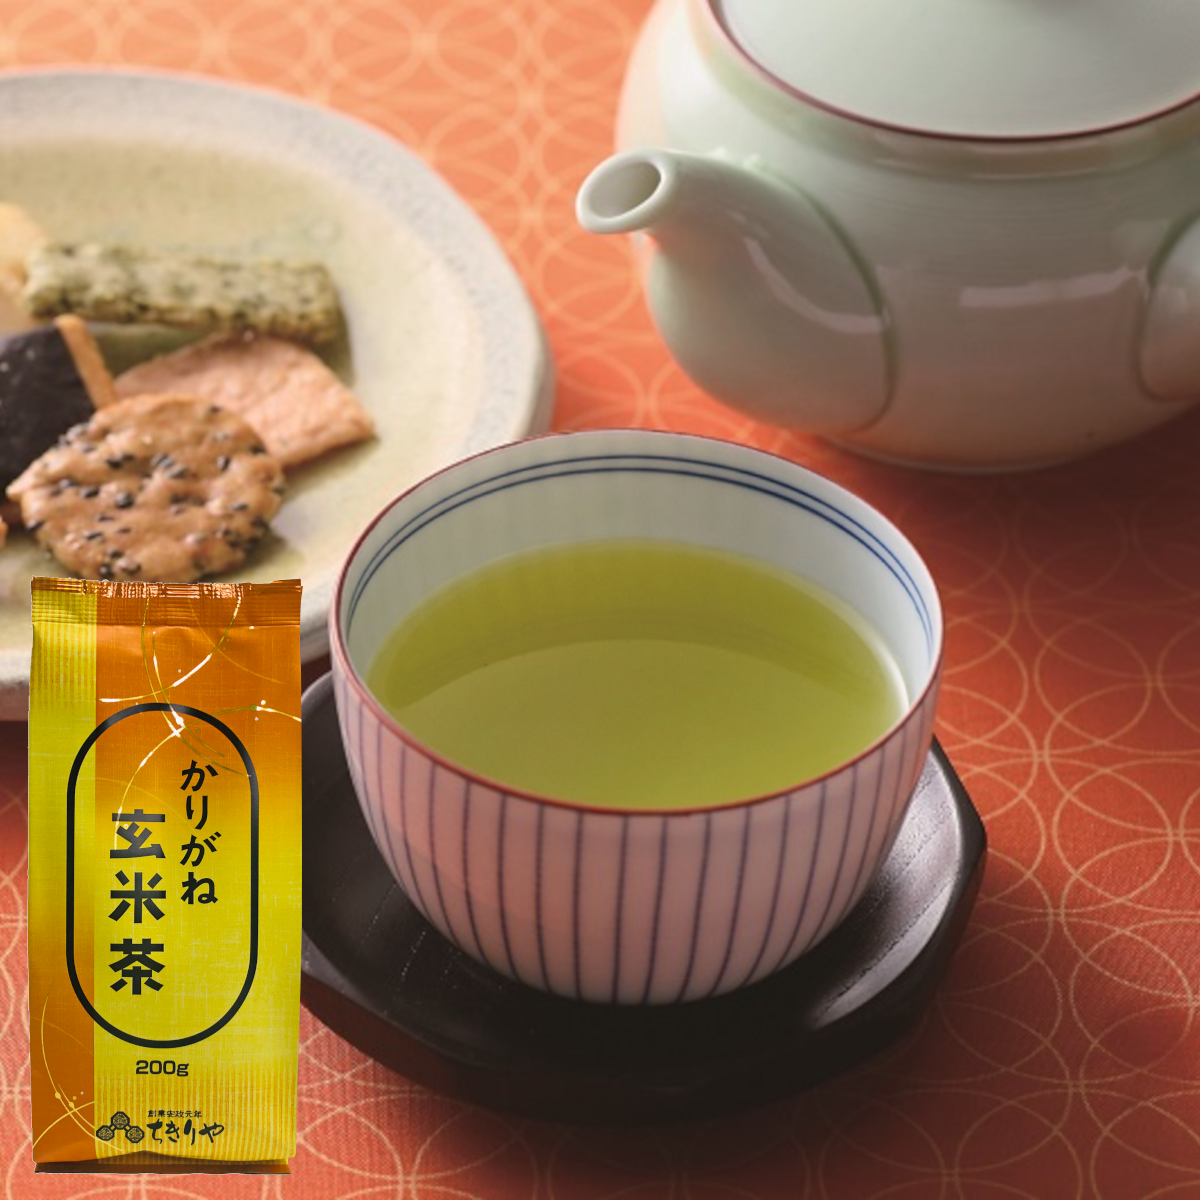 Karigane Genmaicha (roasted brown rice with Japanese green tea) - 200g tea leaves